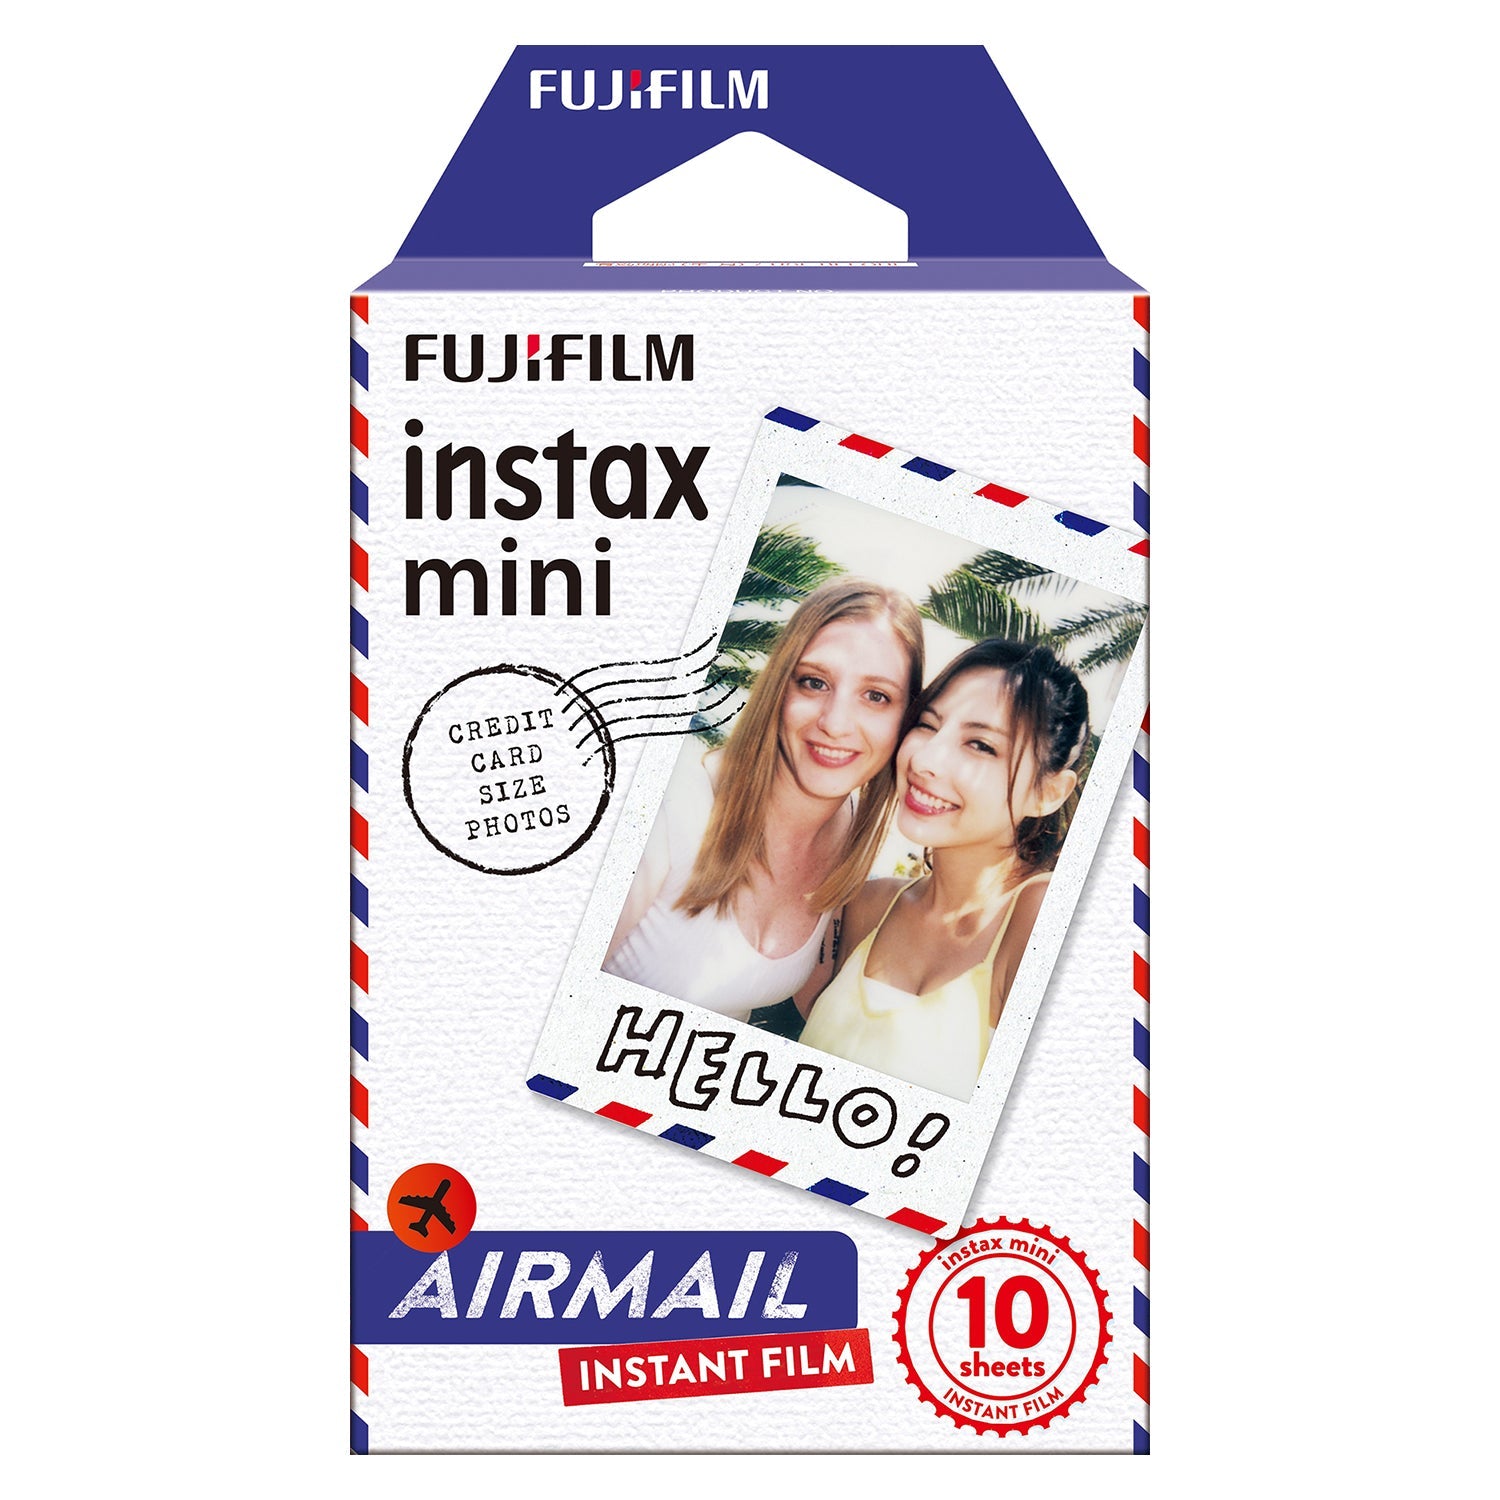 Fujifilm Instax Mini 10X1 airmail Instant Film with 96-sheet Album for mini film (lce white)